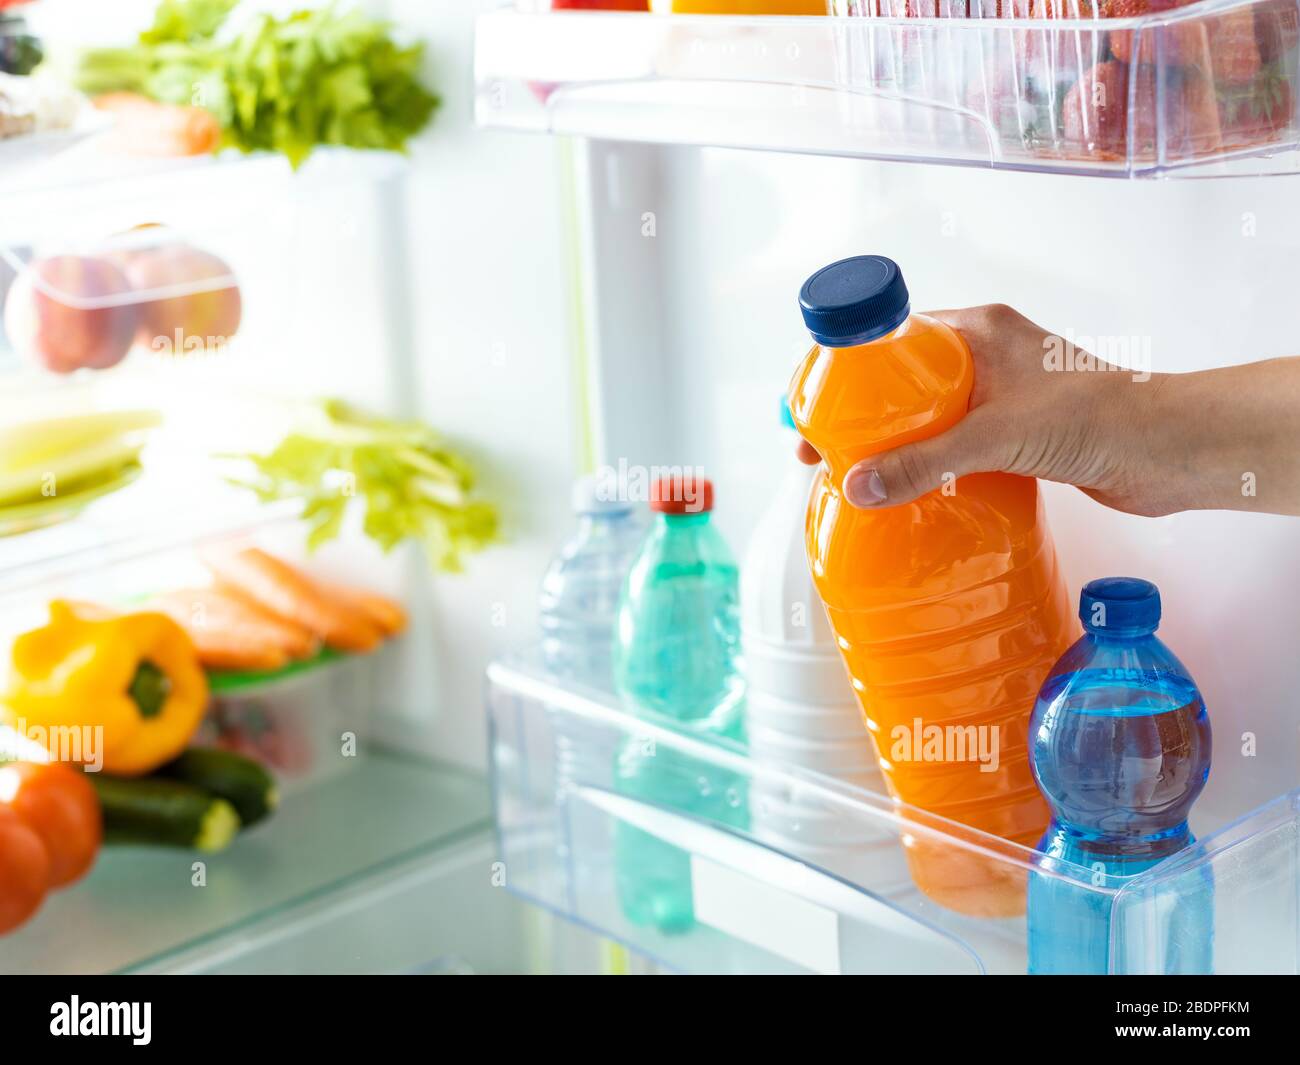 Orange juice bottles in refrigerator Stock Photo - Alamy